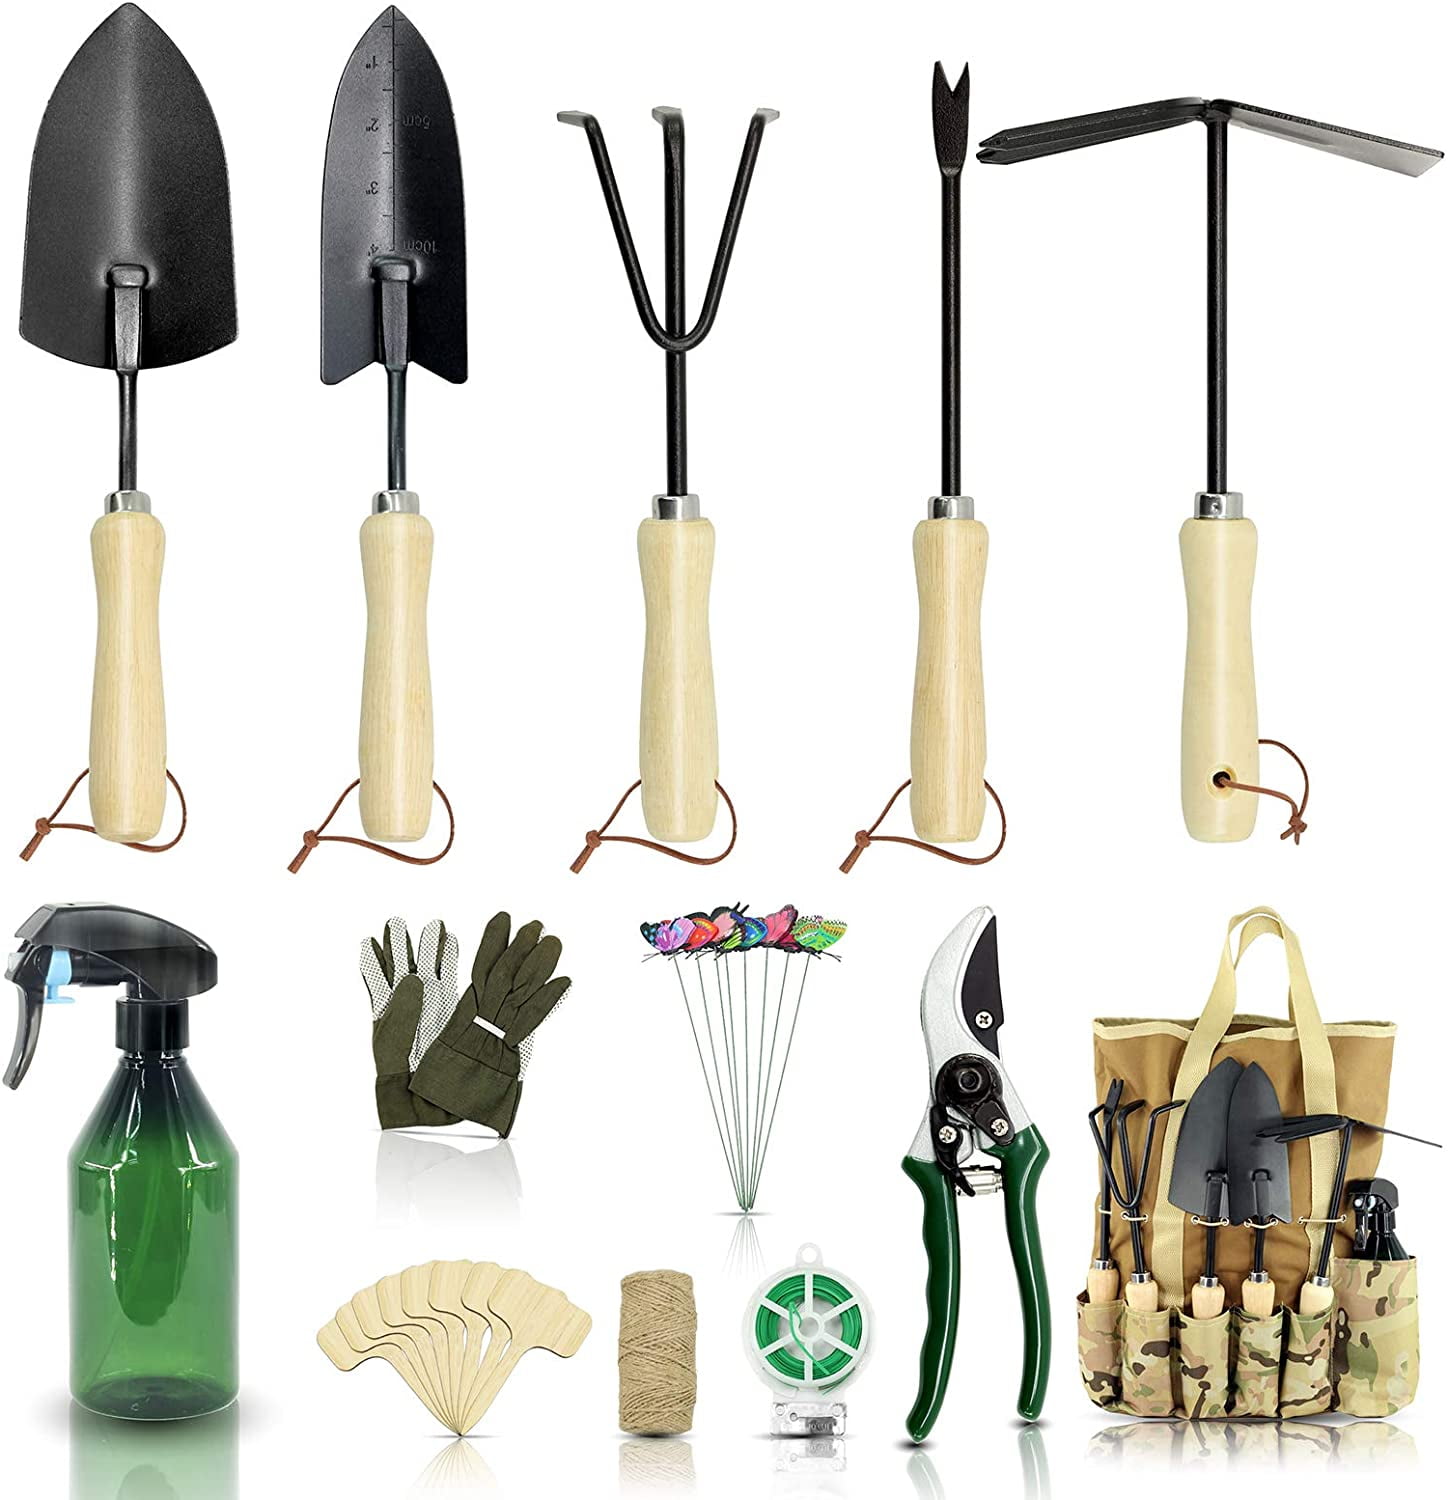 Black Including Garden Scissors,Gardening Glove,Garden Clippers,Sharp Pruning Shears,Yartting SK5 Blades Garden Shears,3-Pack Pruner Set 